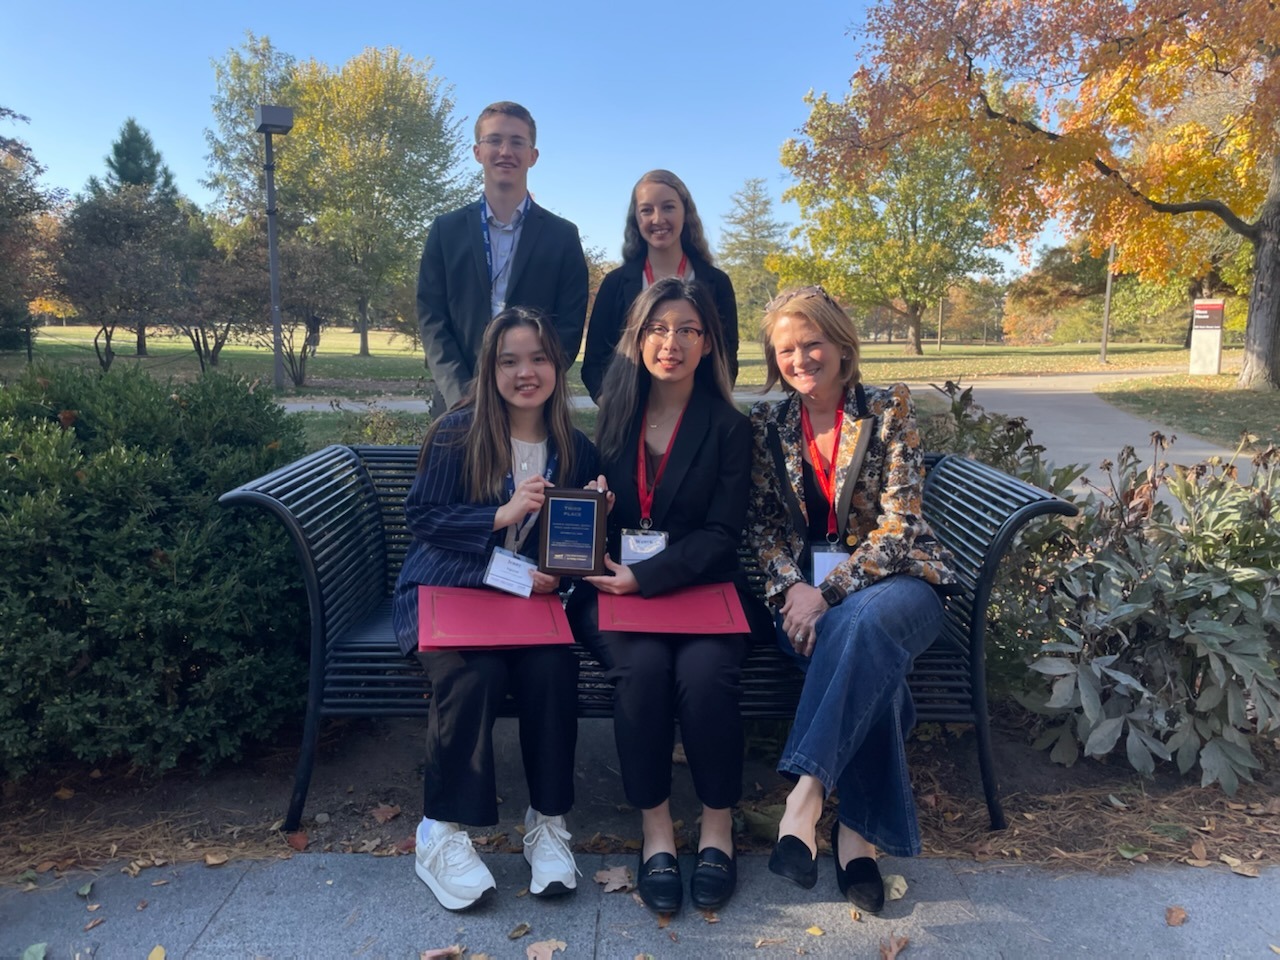 Students at the University of Iowa/NASPO case competition and faculty advisor Verda Blythe